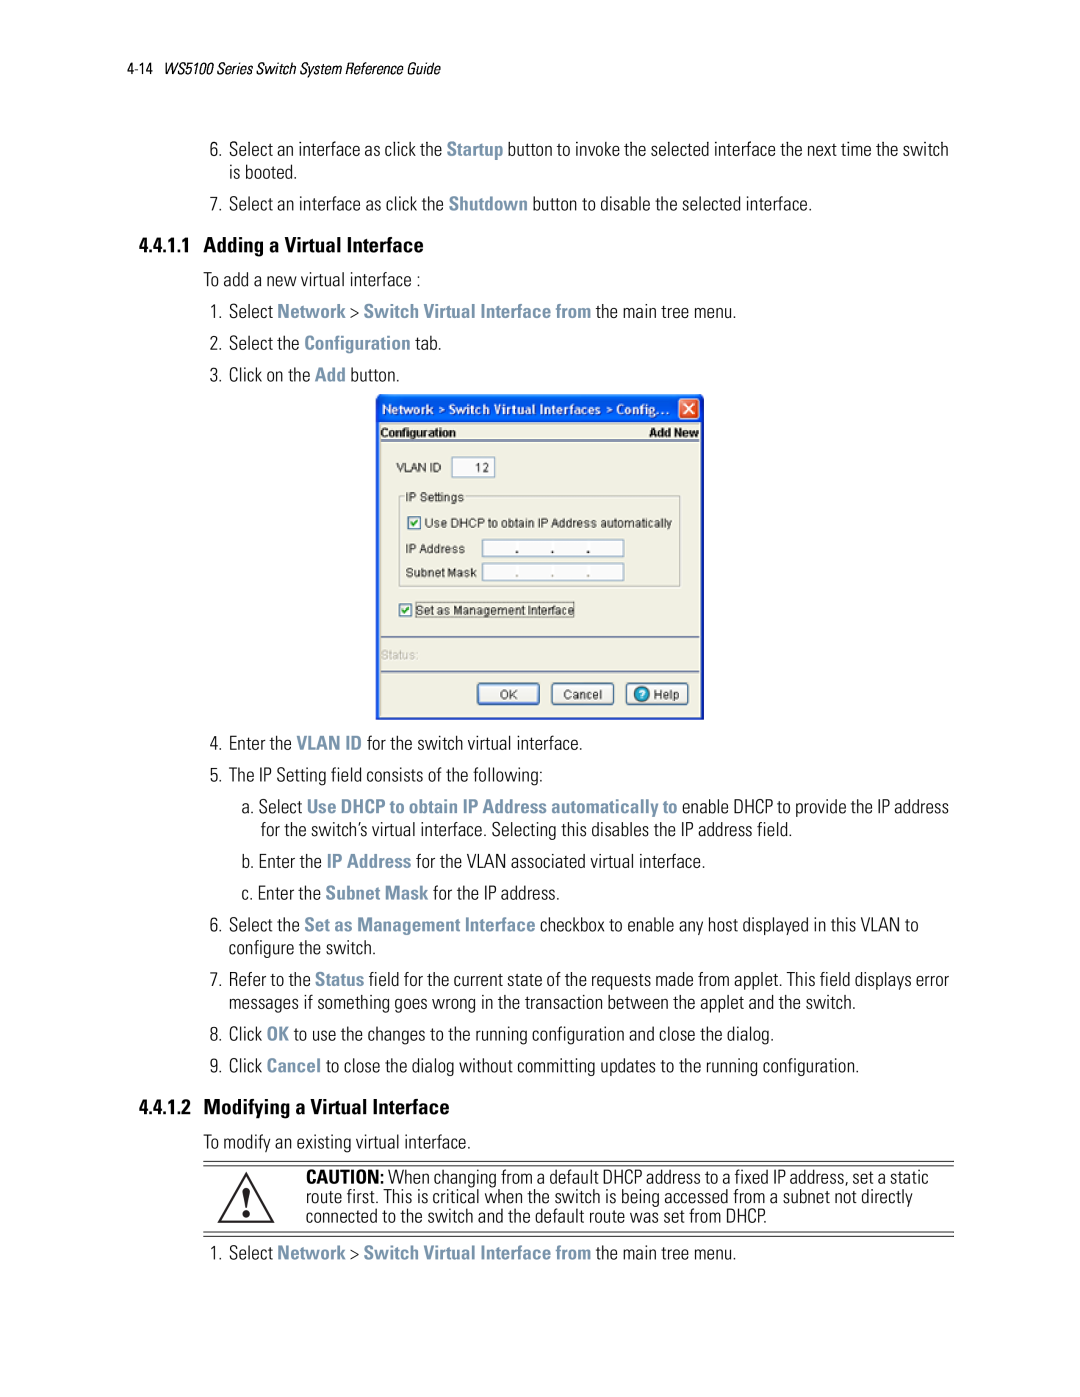 Motorola WS5100 manual 4.4.1.1Adding a Virtual Interface, 4.4.1.2Modifying a Virtual Interface 